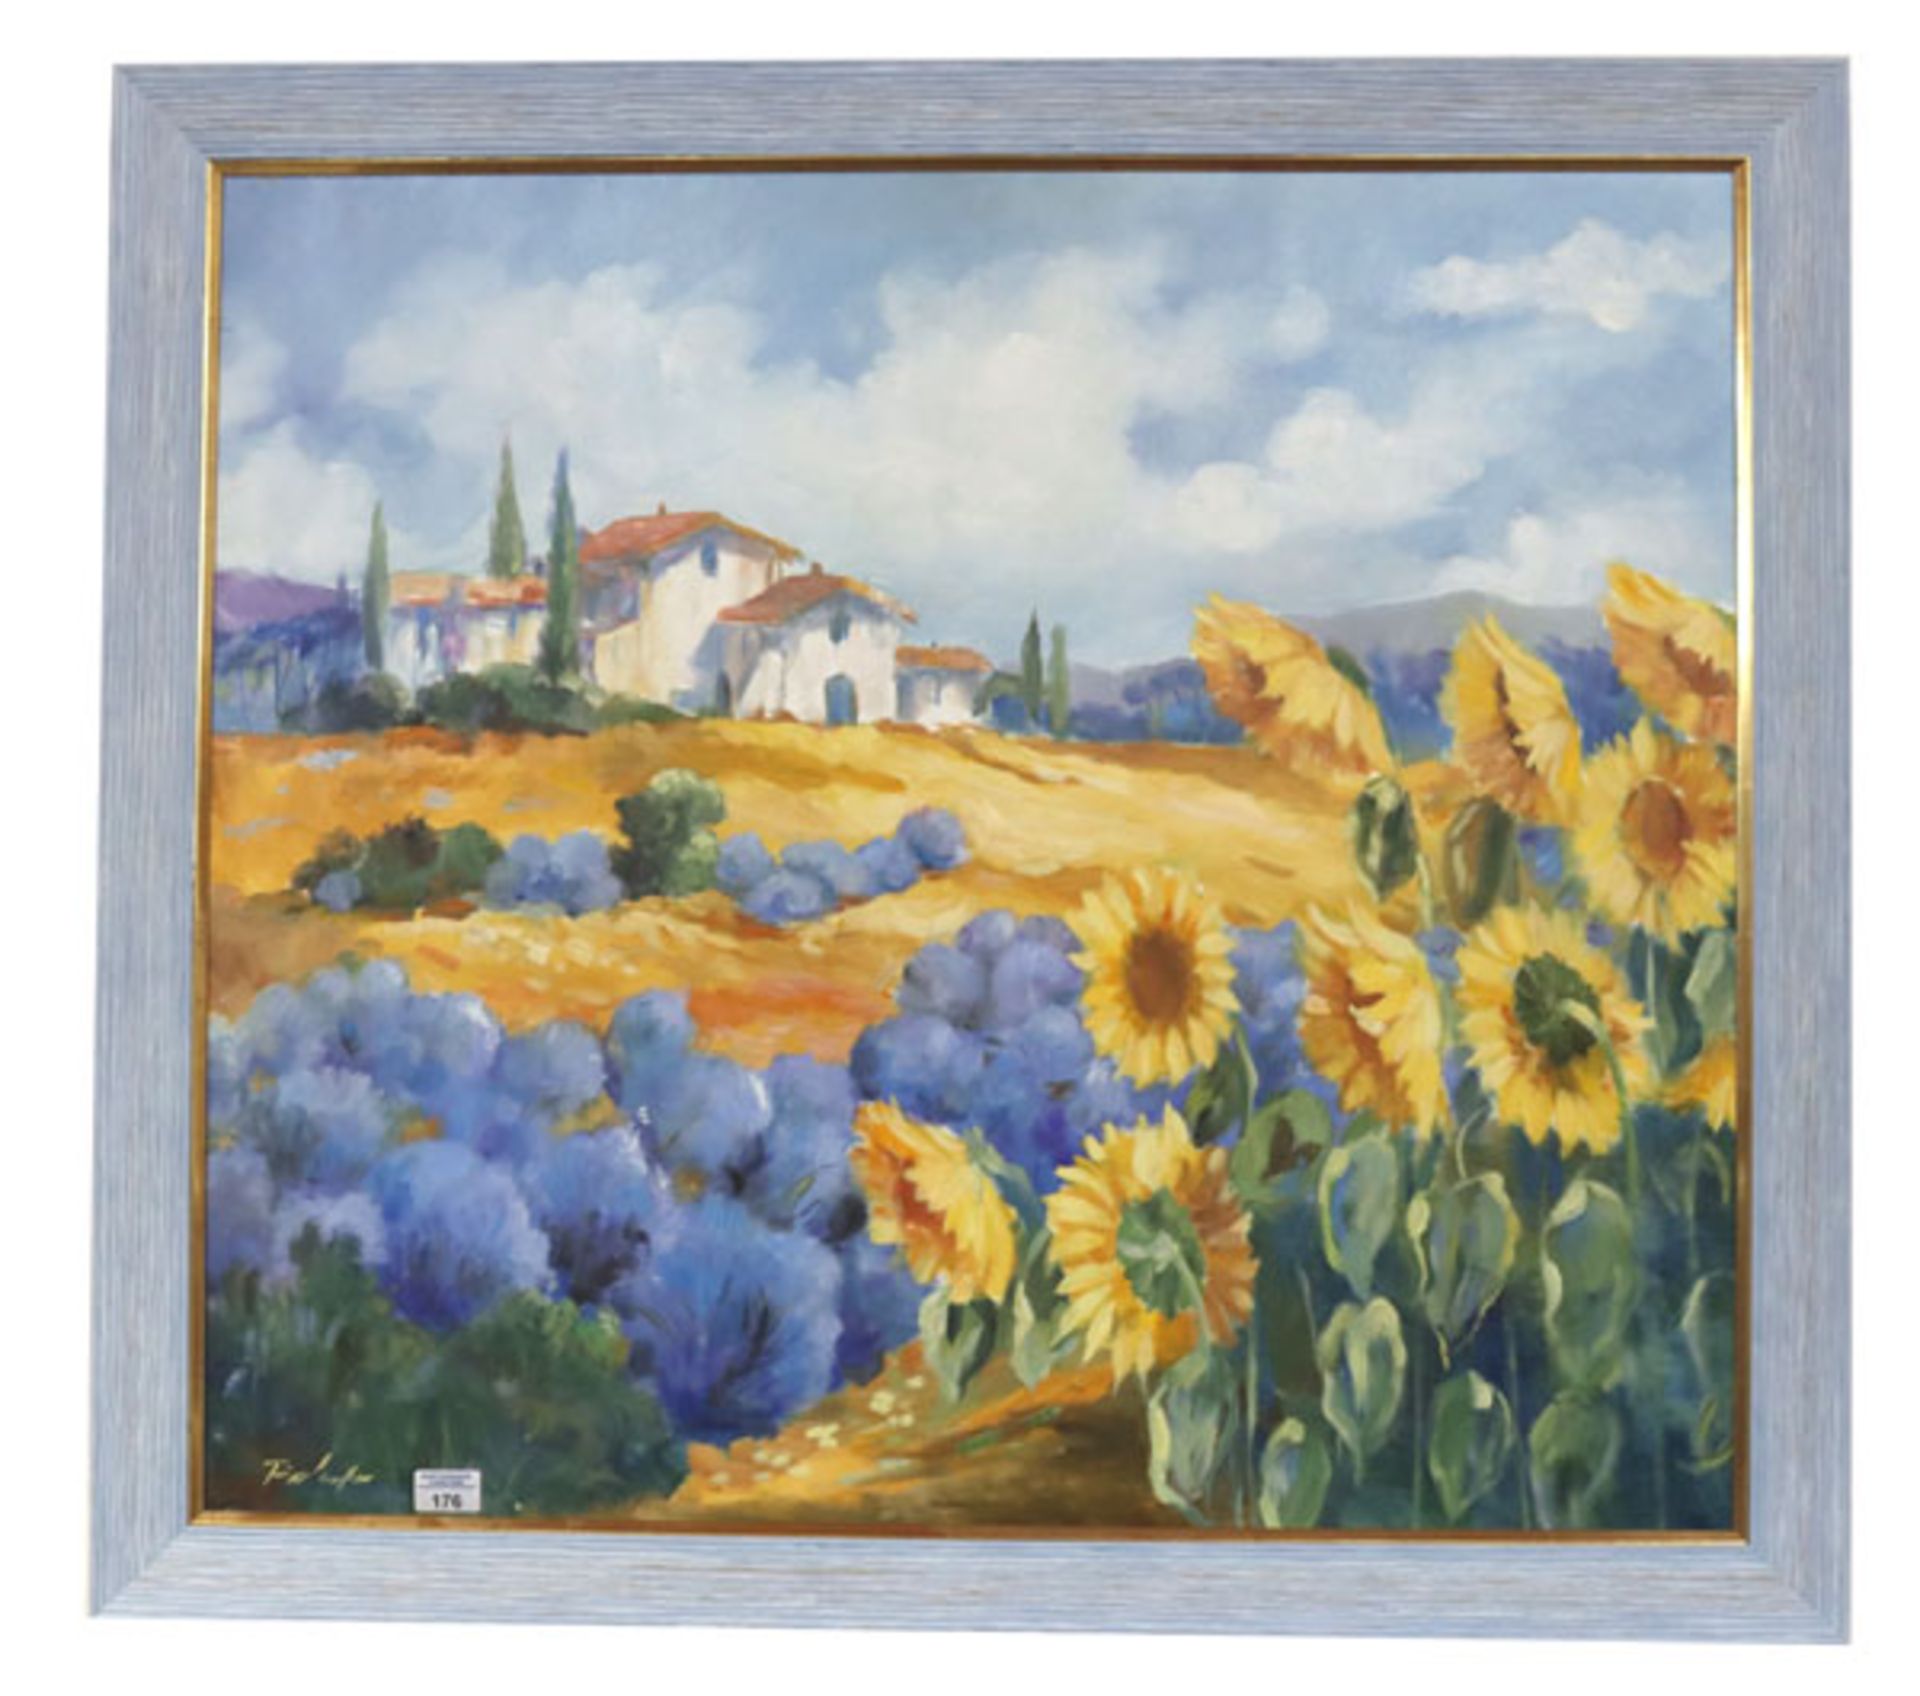 Gemälde ÖL/LW 'Toskana Landschaft', undeutlich signiert, gerahmt, Rahmen leicht berieben, incl.